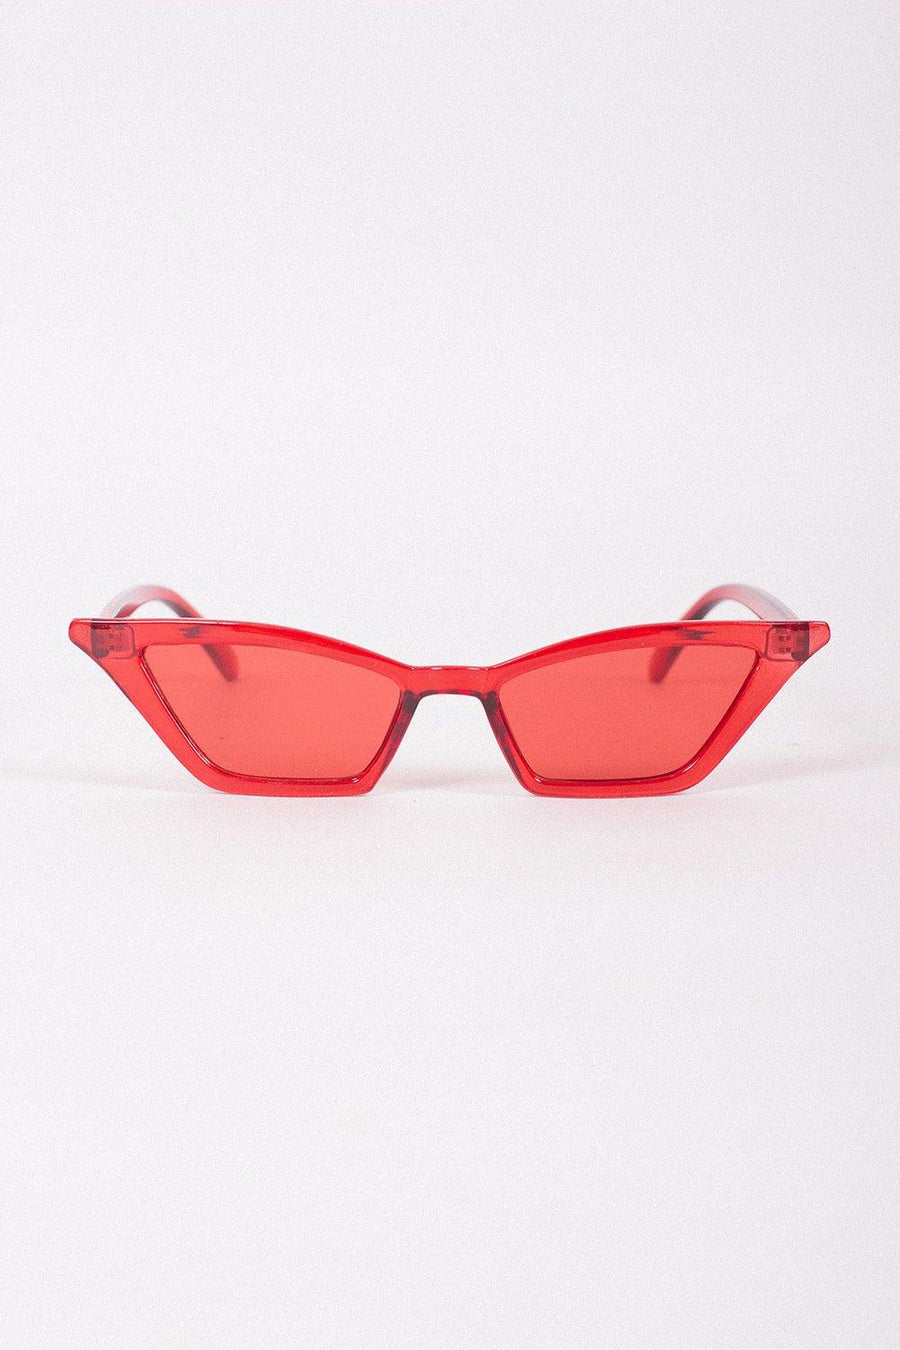 Red Cat Eye Sunglasses - Mawoolisa